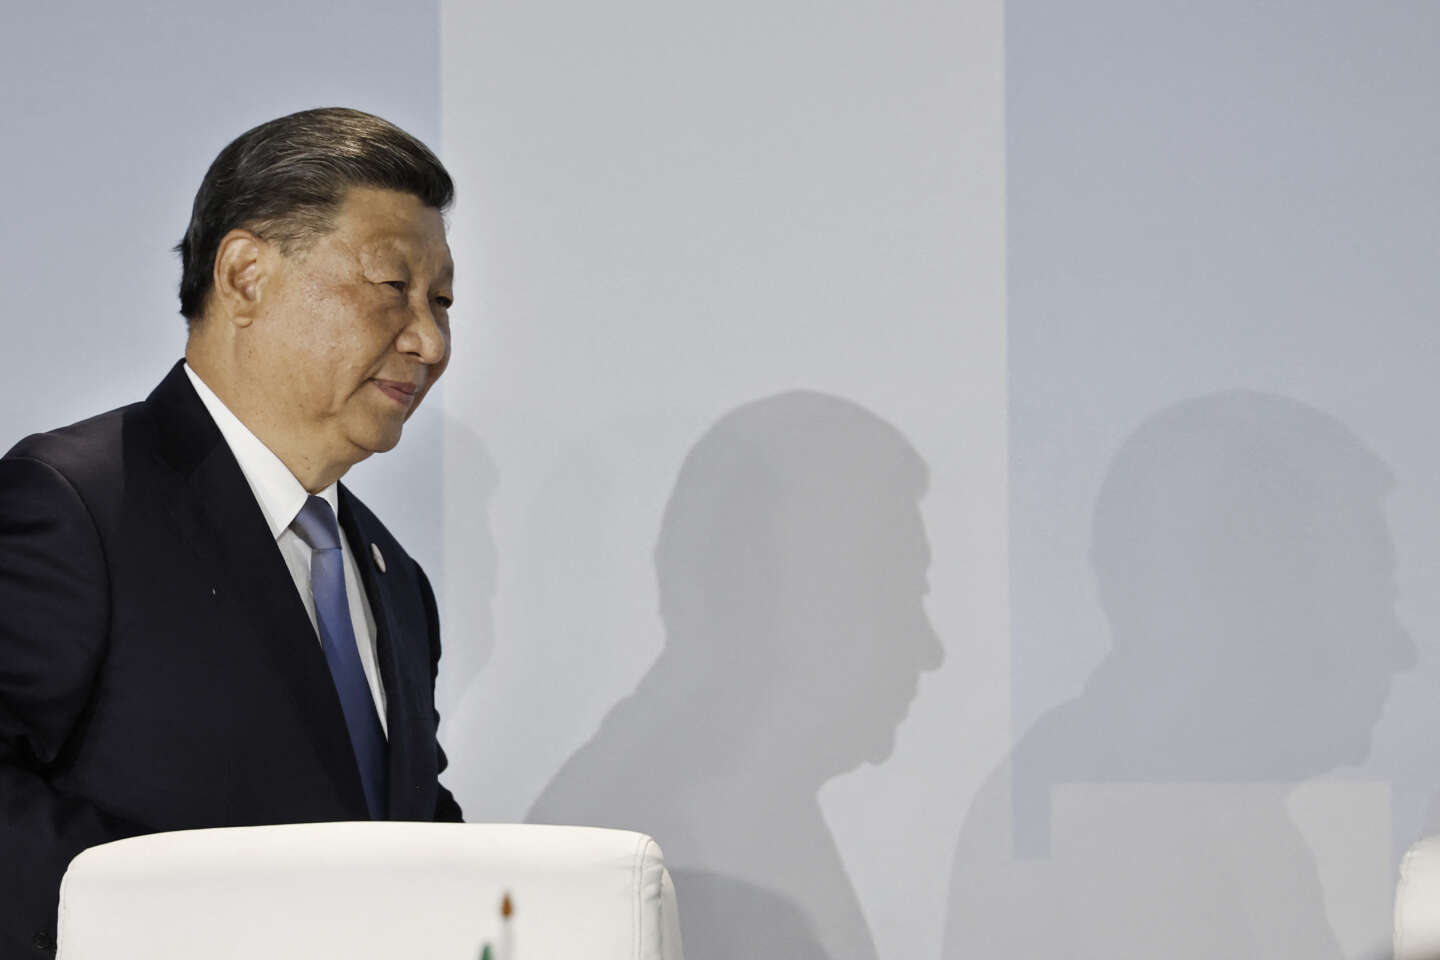 La diplomacia de Xi Jinping se ve frustrada por la firmeza estadounidense